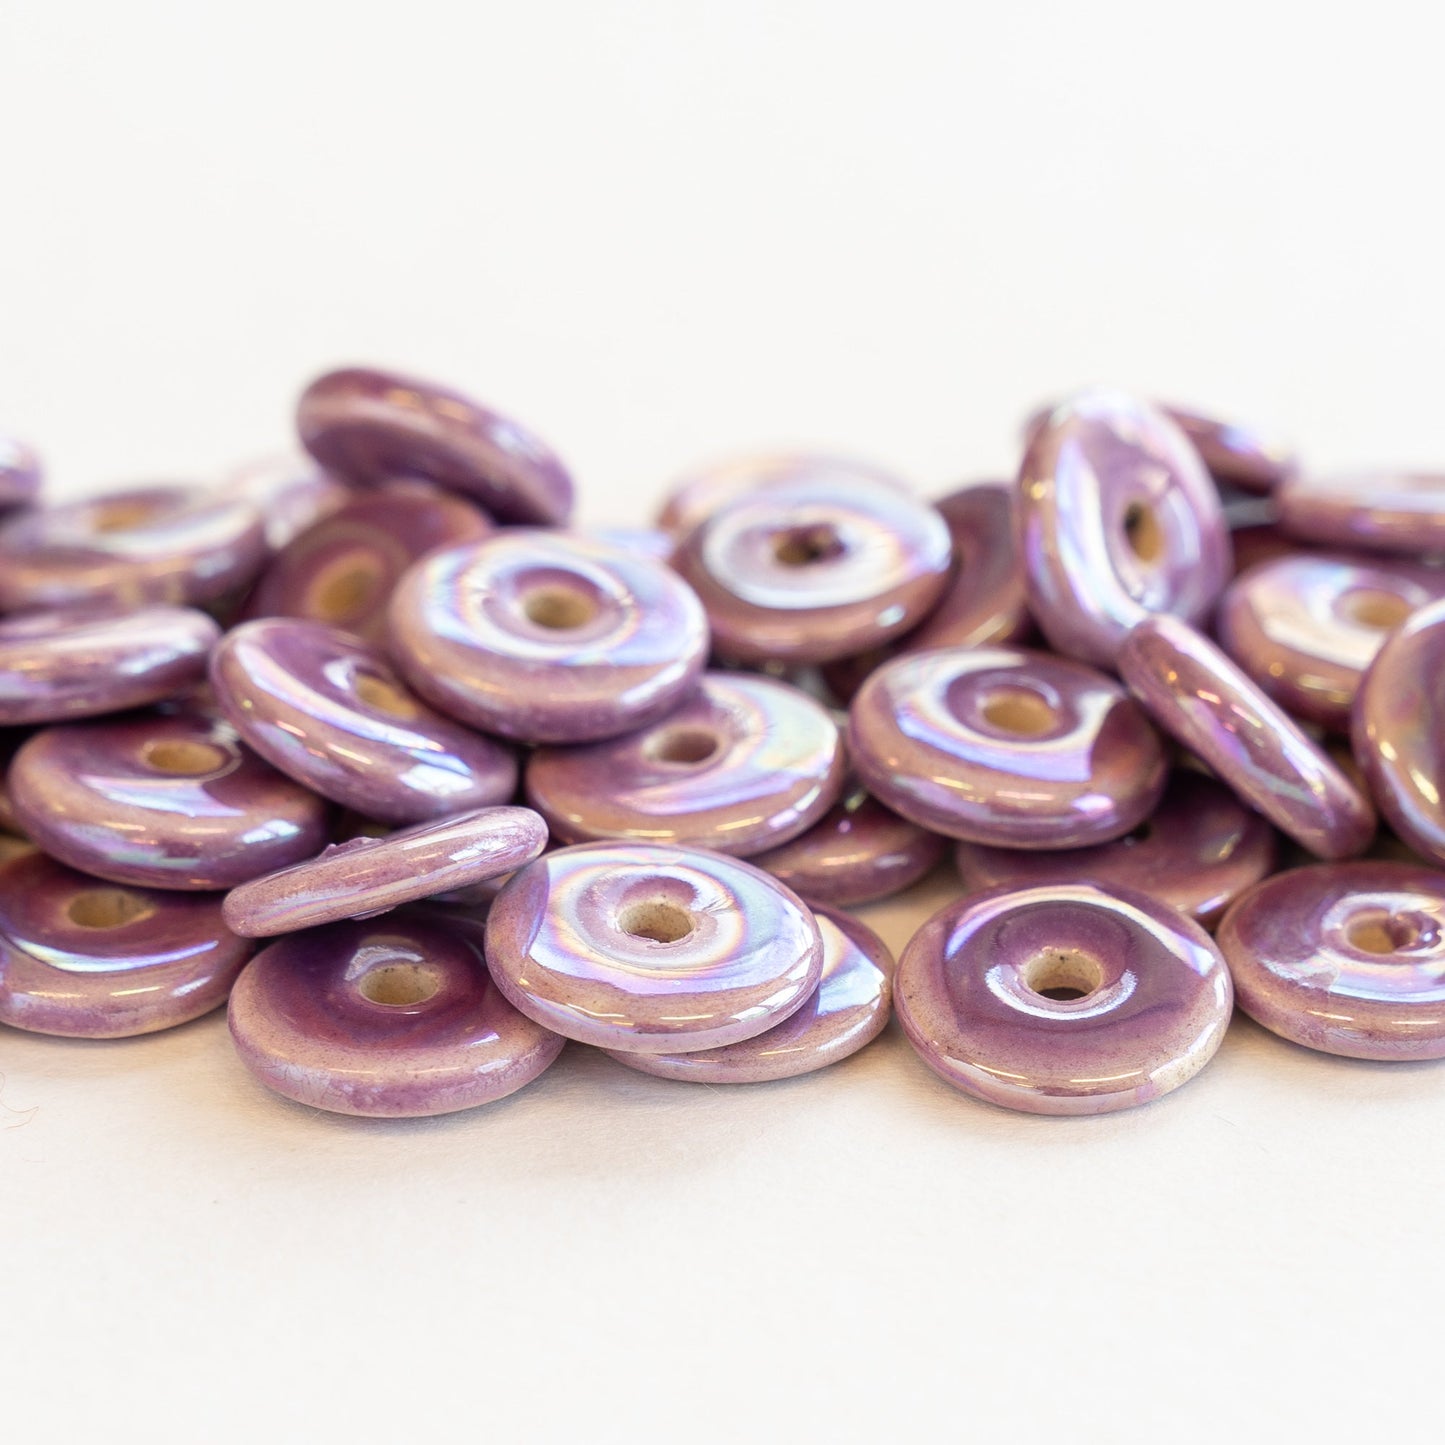 13mm Glazed Ceramic Disk Beads - Iridescent Purple Passion - 6 or 18